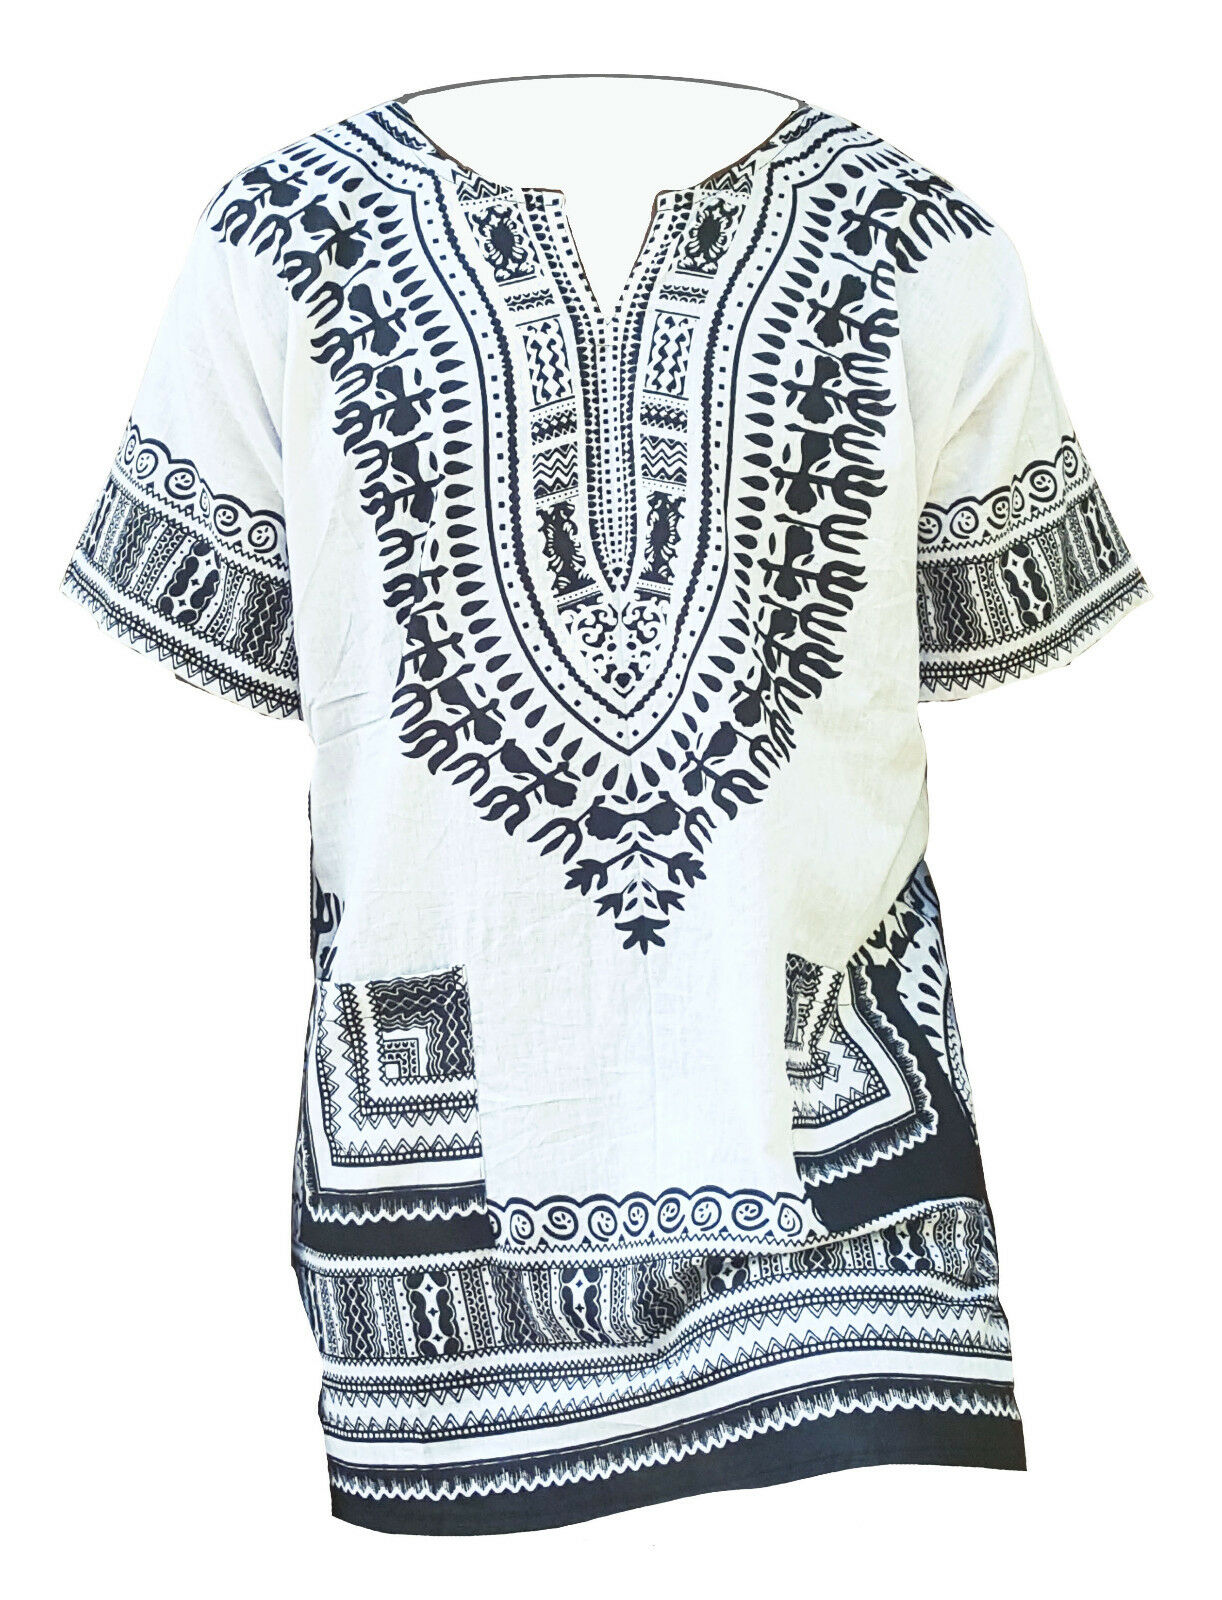 Off White African Unisex Dashiki Shirt Dp3830 Small To 7xl Plus Size